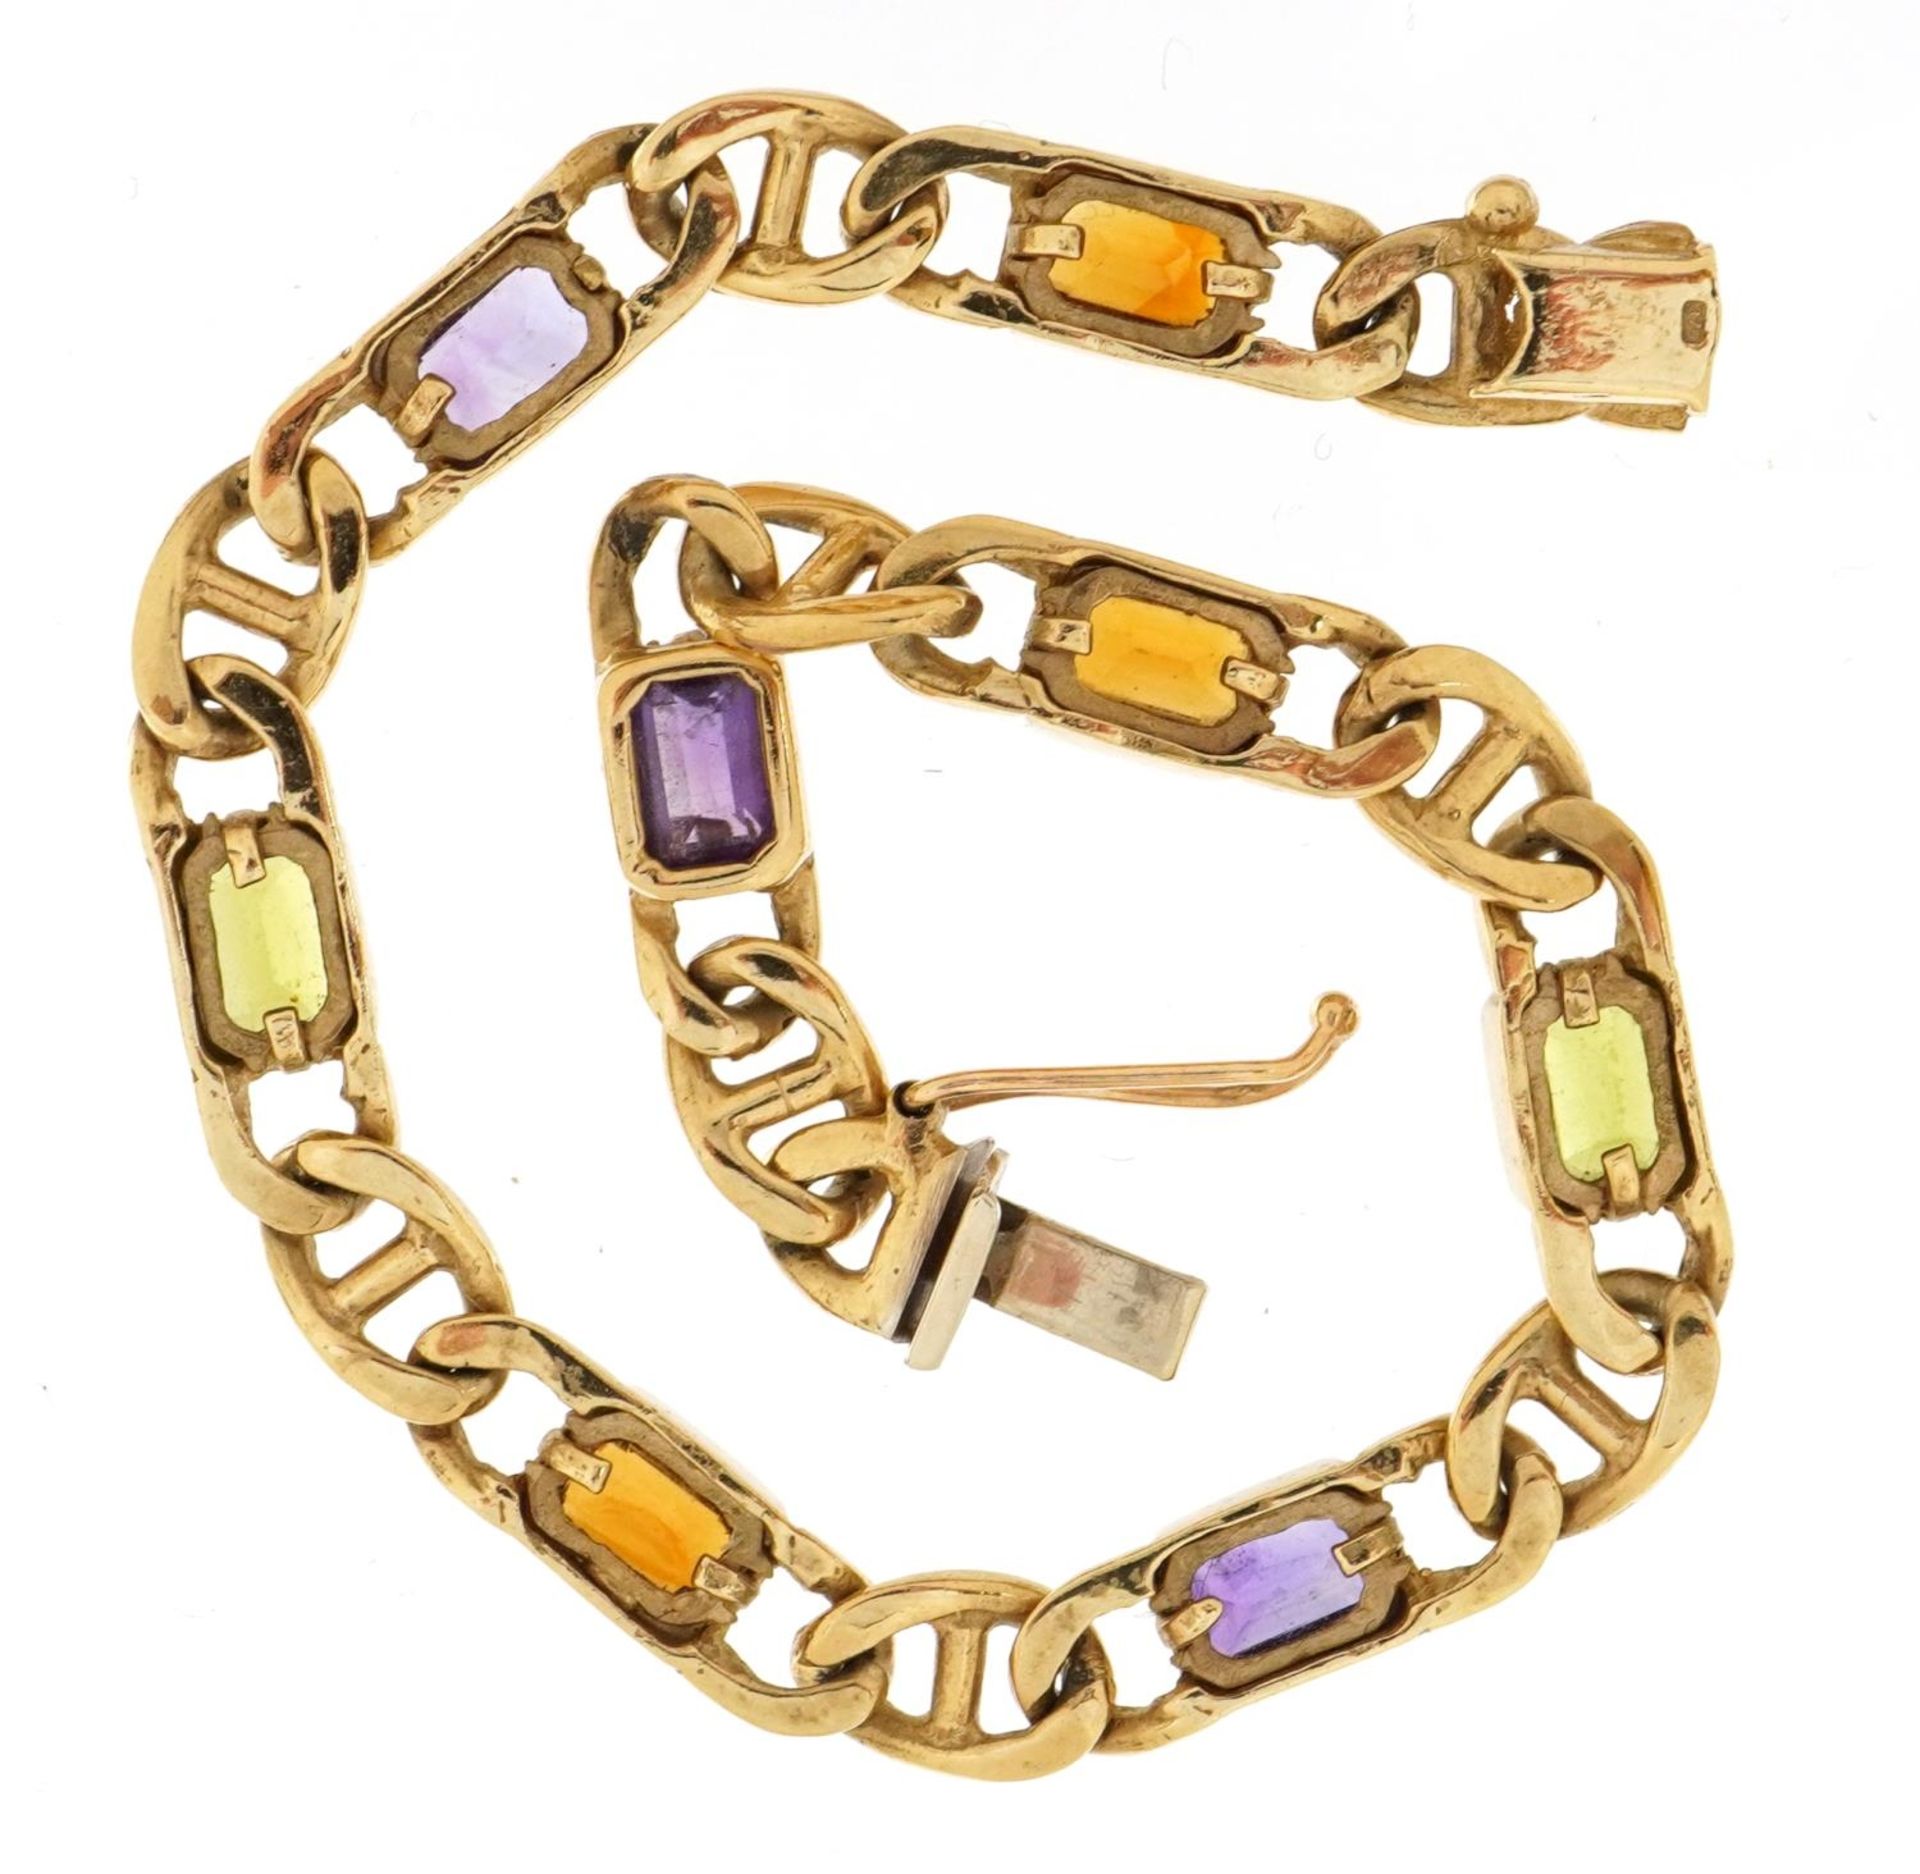 9ct gold curb link design bracelet set with purple, green and orange stones, 17.5cm in length, 12.4g - Bild 3 aus 4